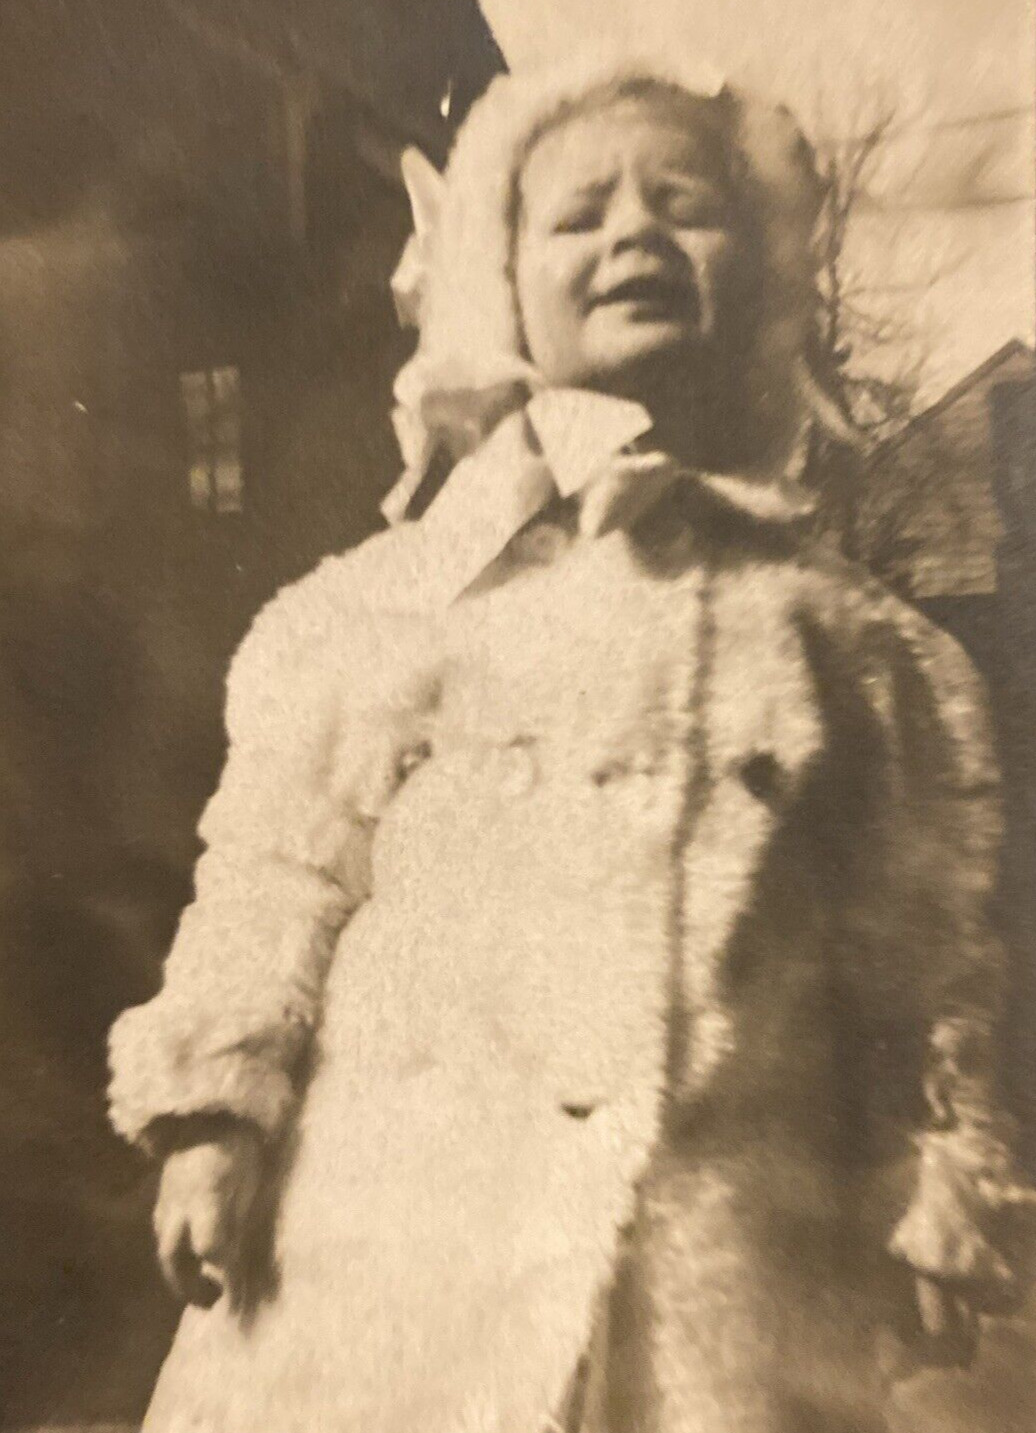 Antique 1910s Young Girl Crying White Fur Coat Fashion Original Photo P11i113